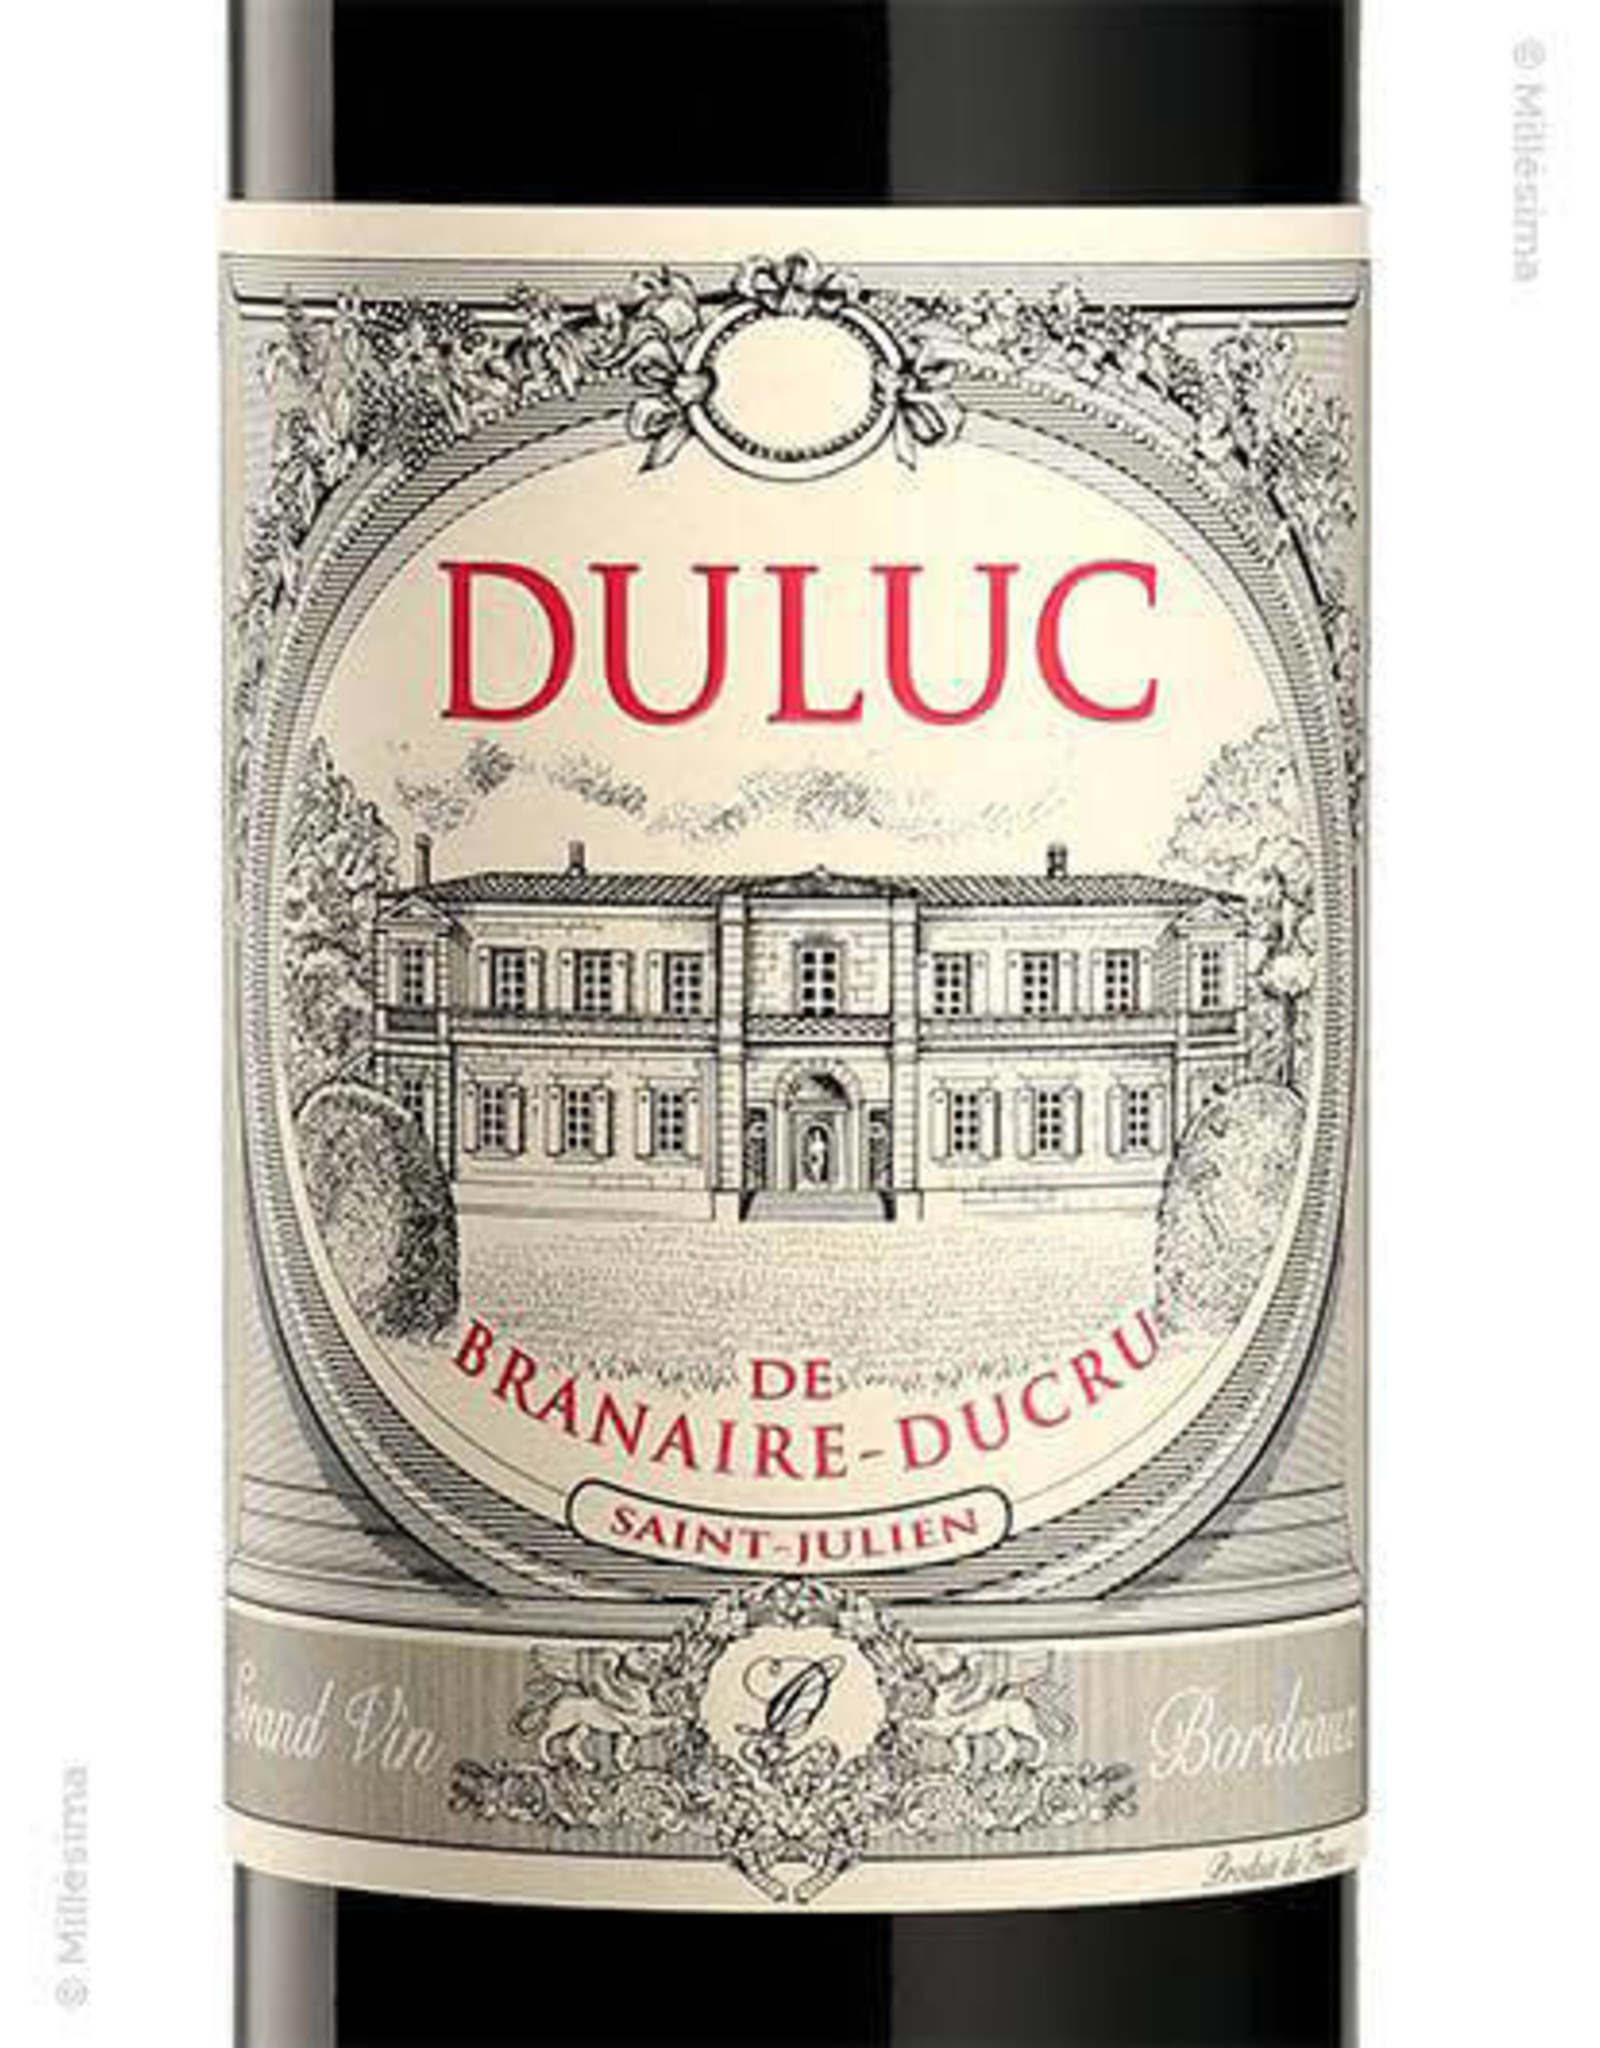 Duluc De Branaire-Ducru, Saint Julien, 2015